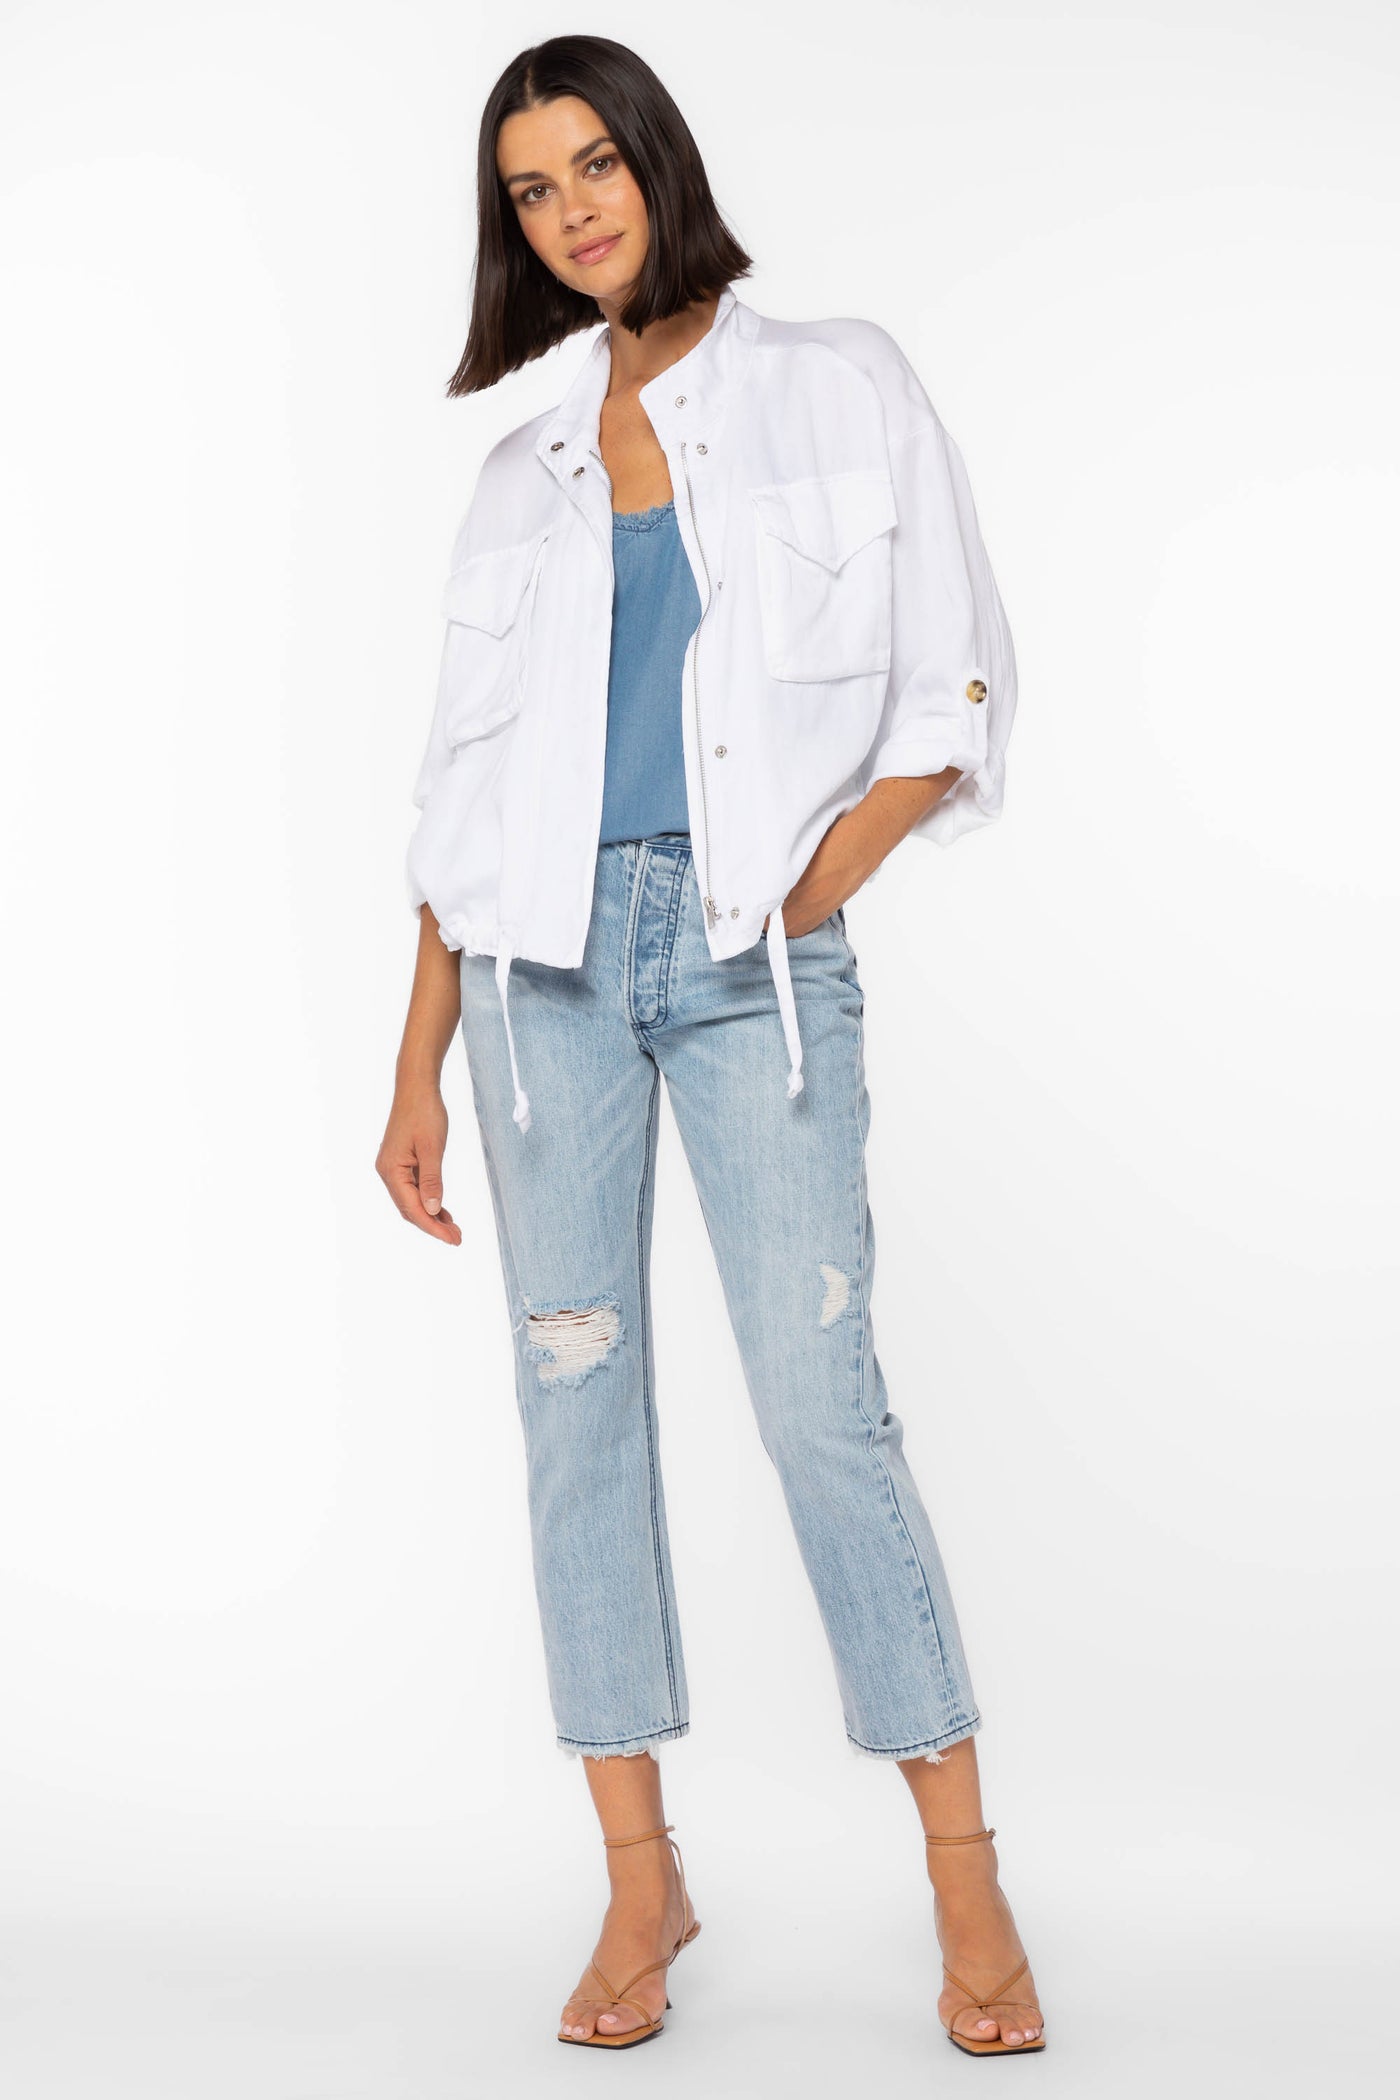 Rogue White Jacket - Jackets & Outerwear - Velvet Heart Clothing